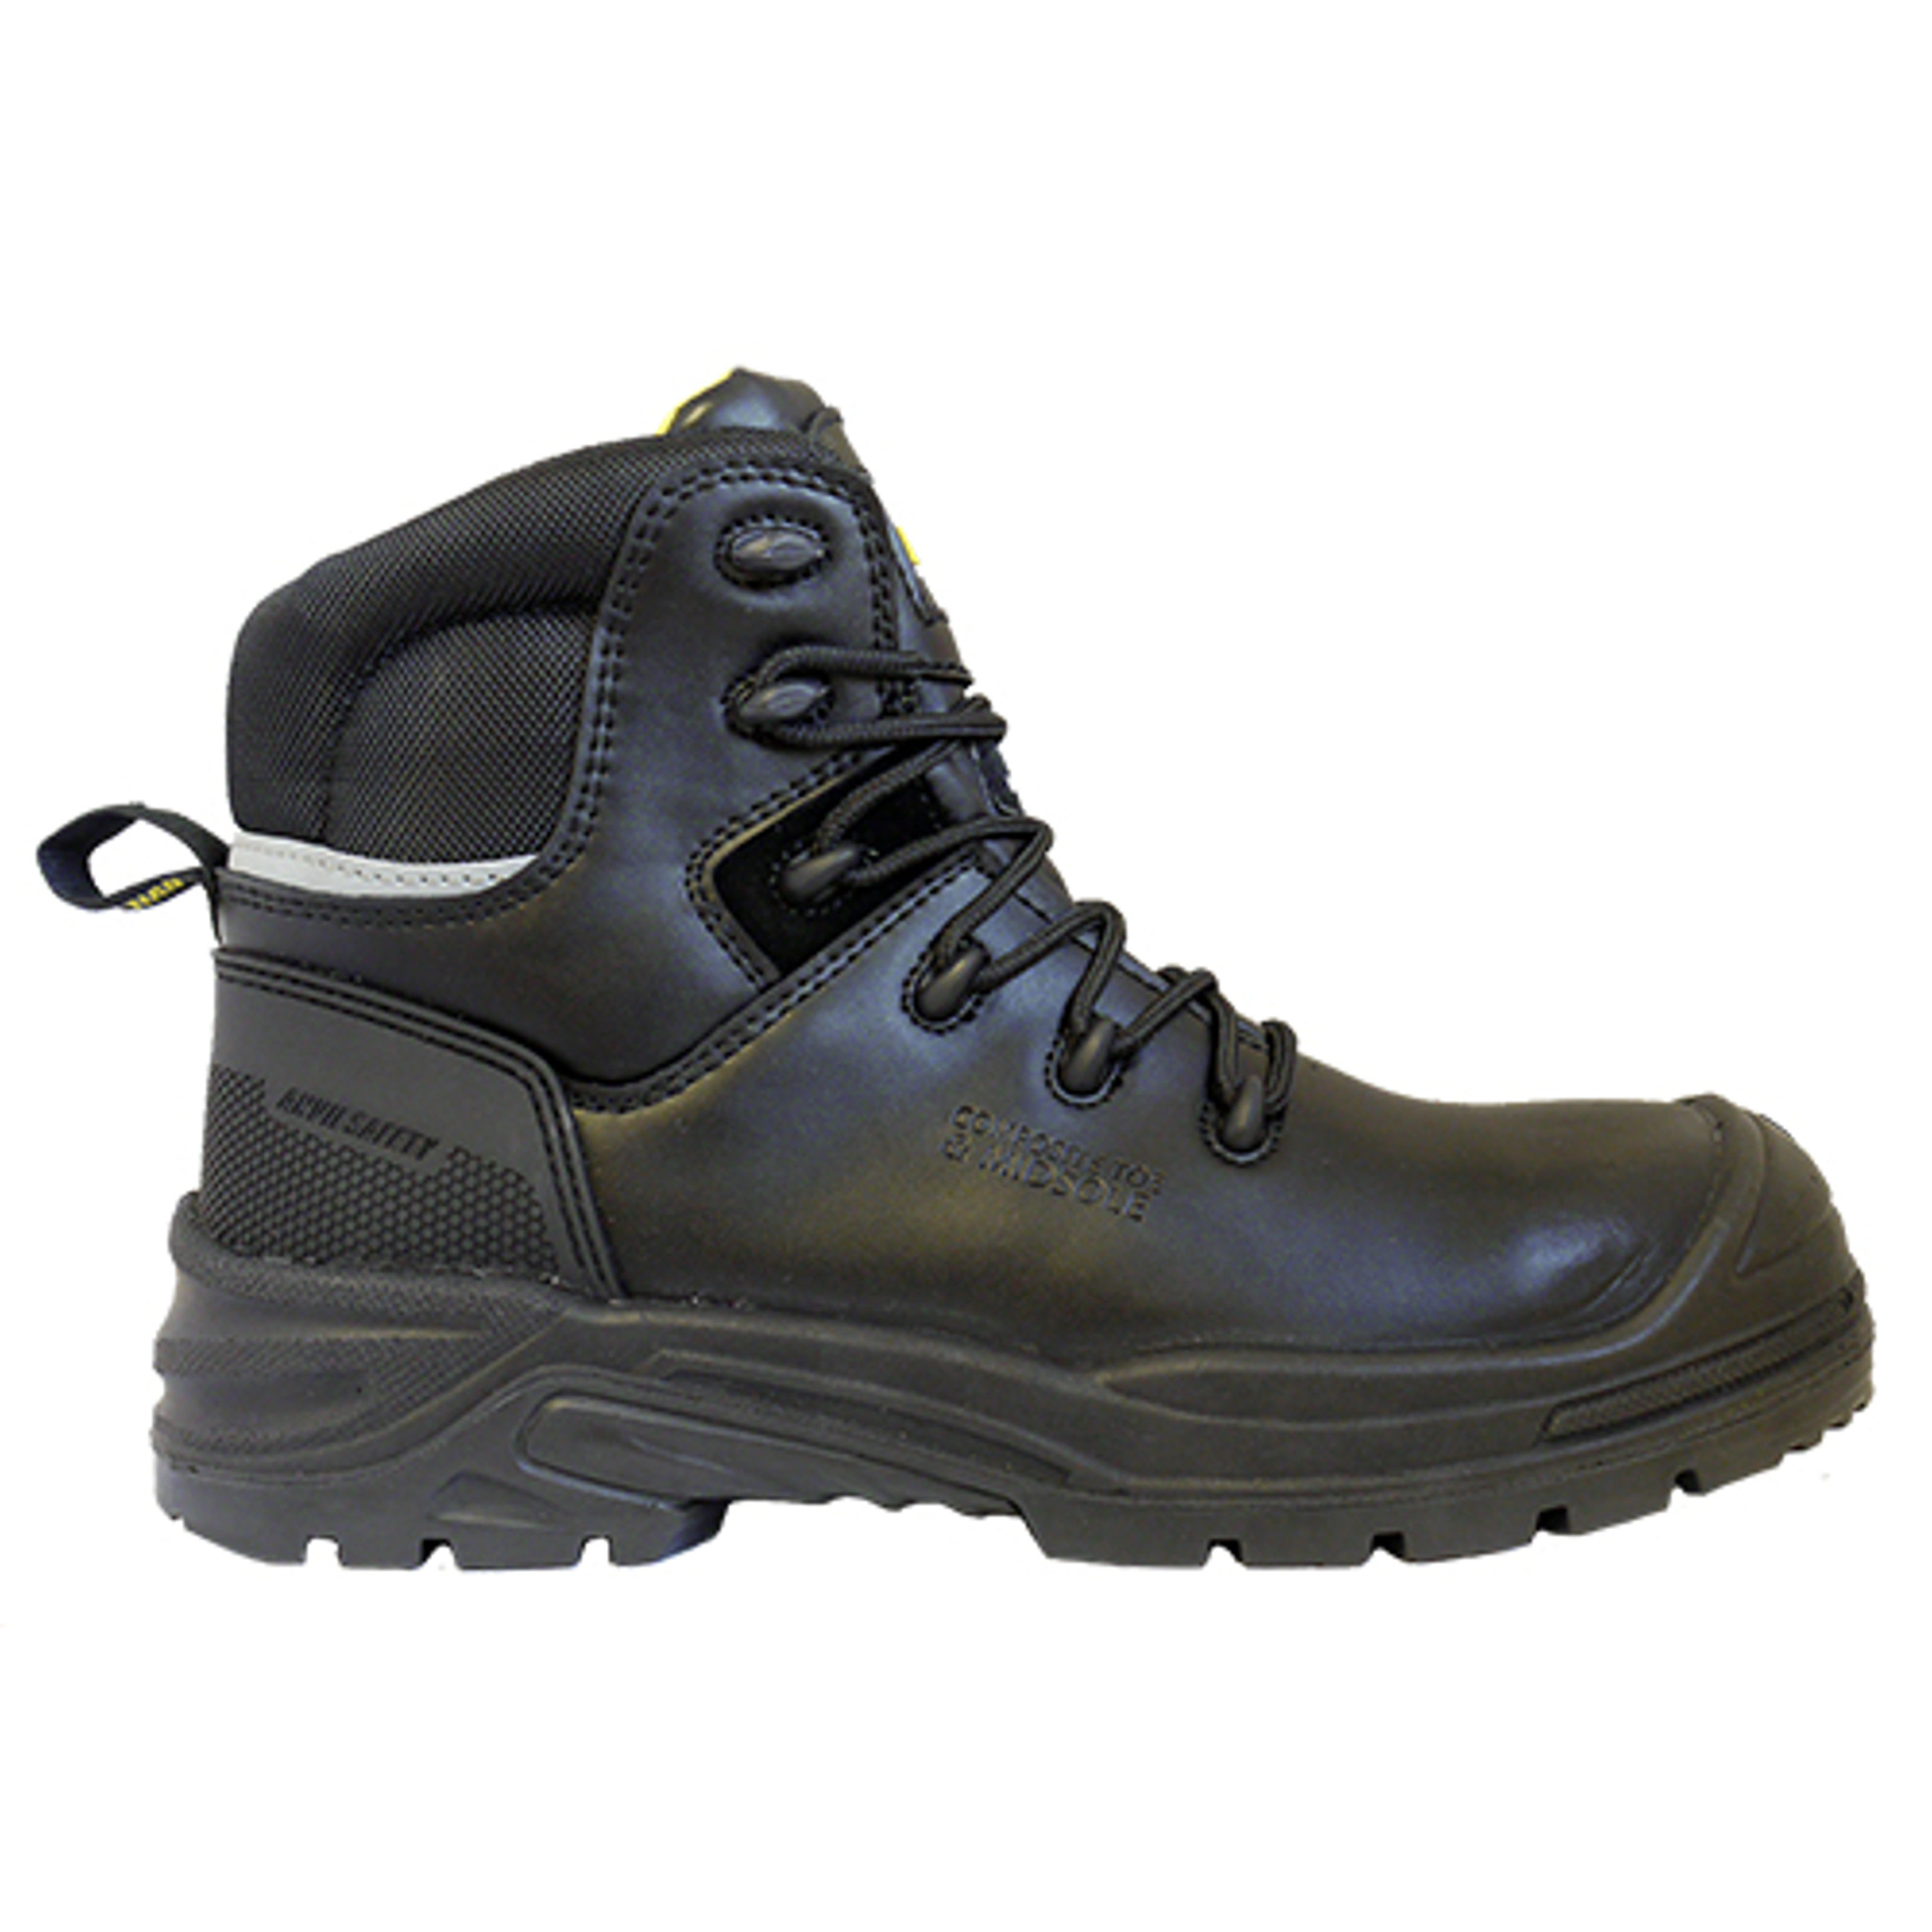 anvil boots